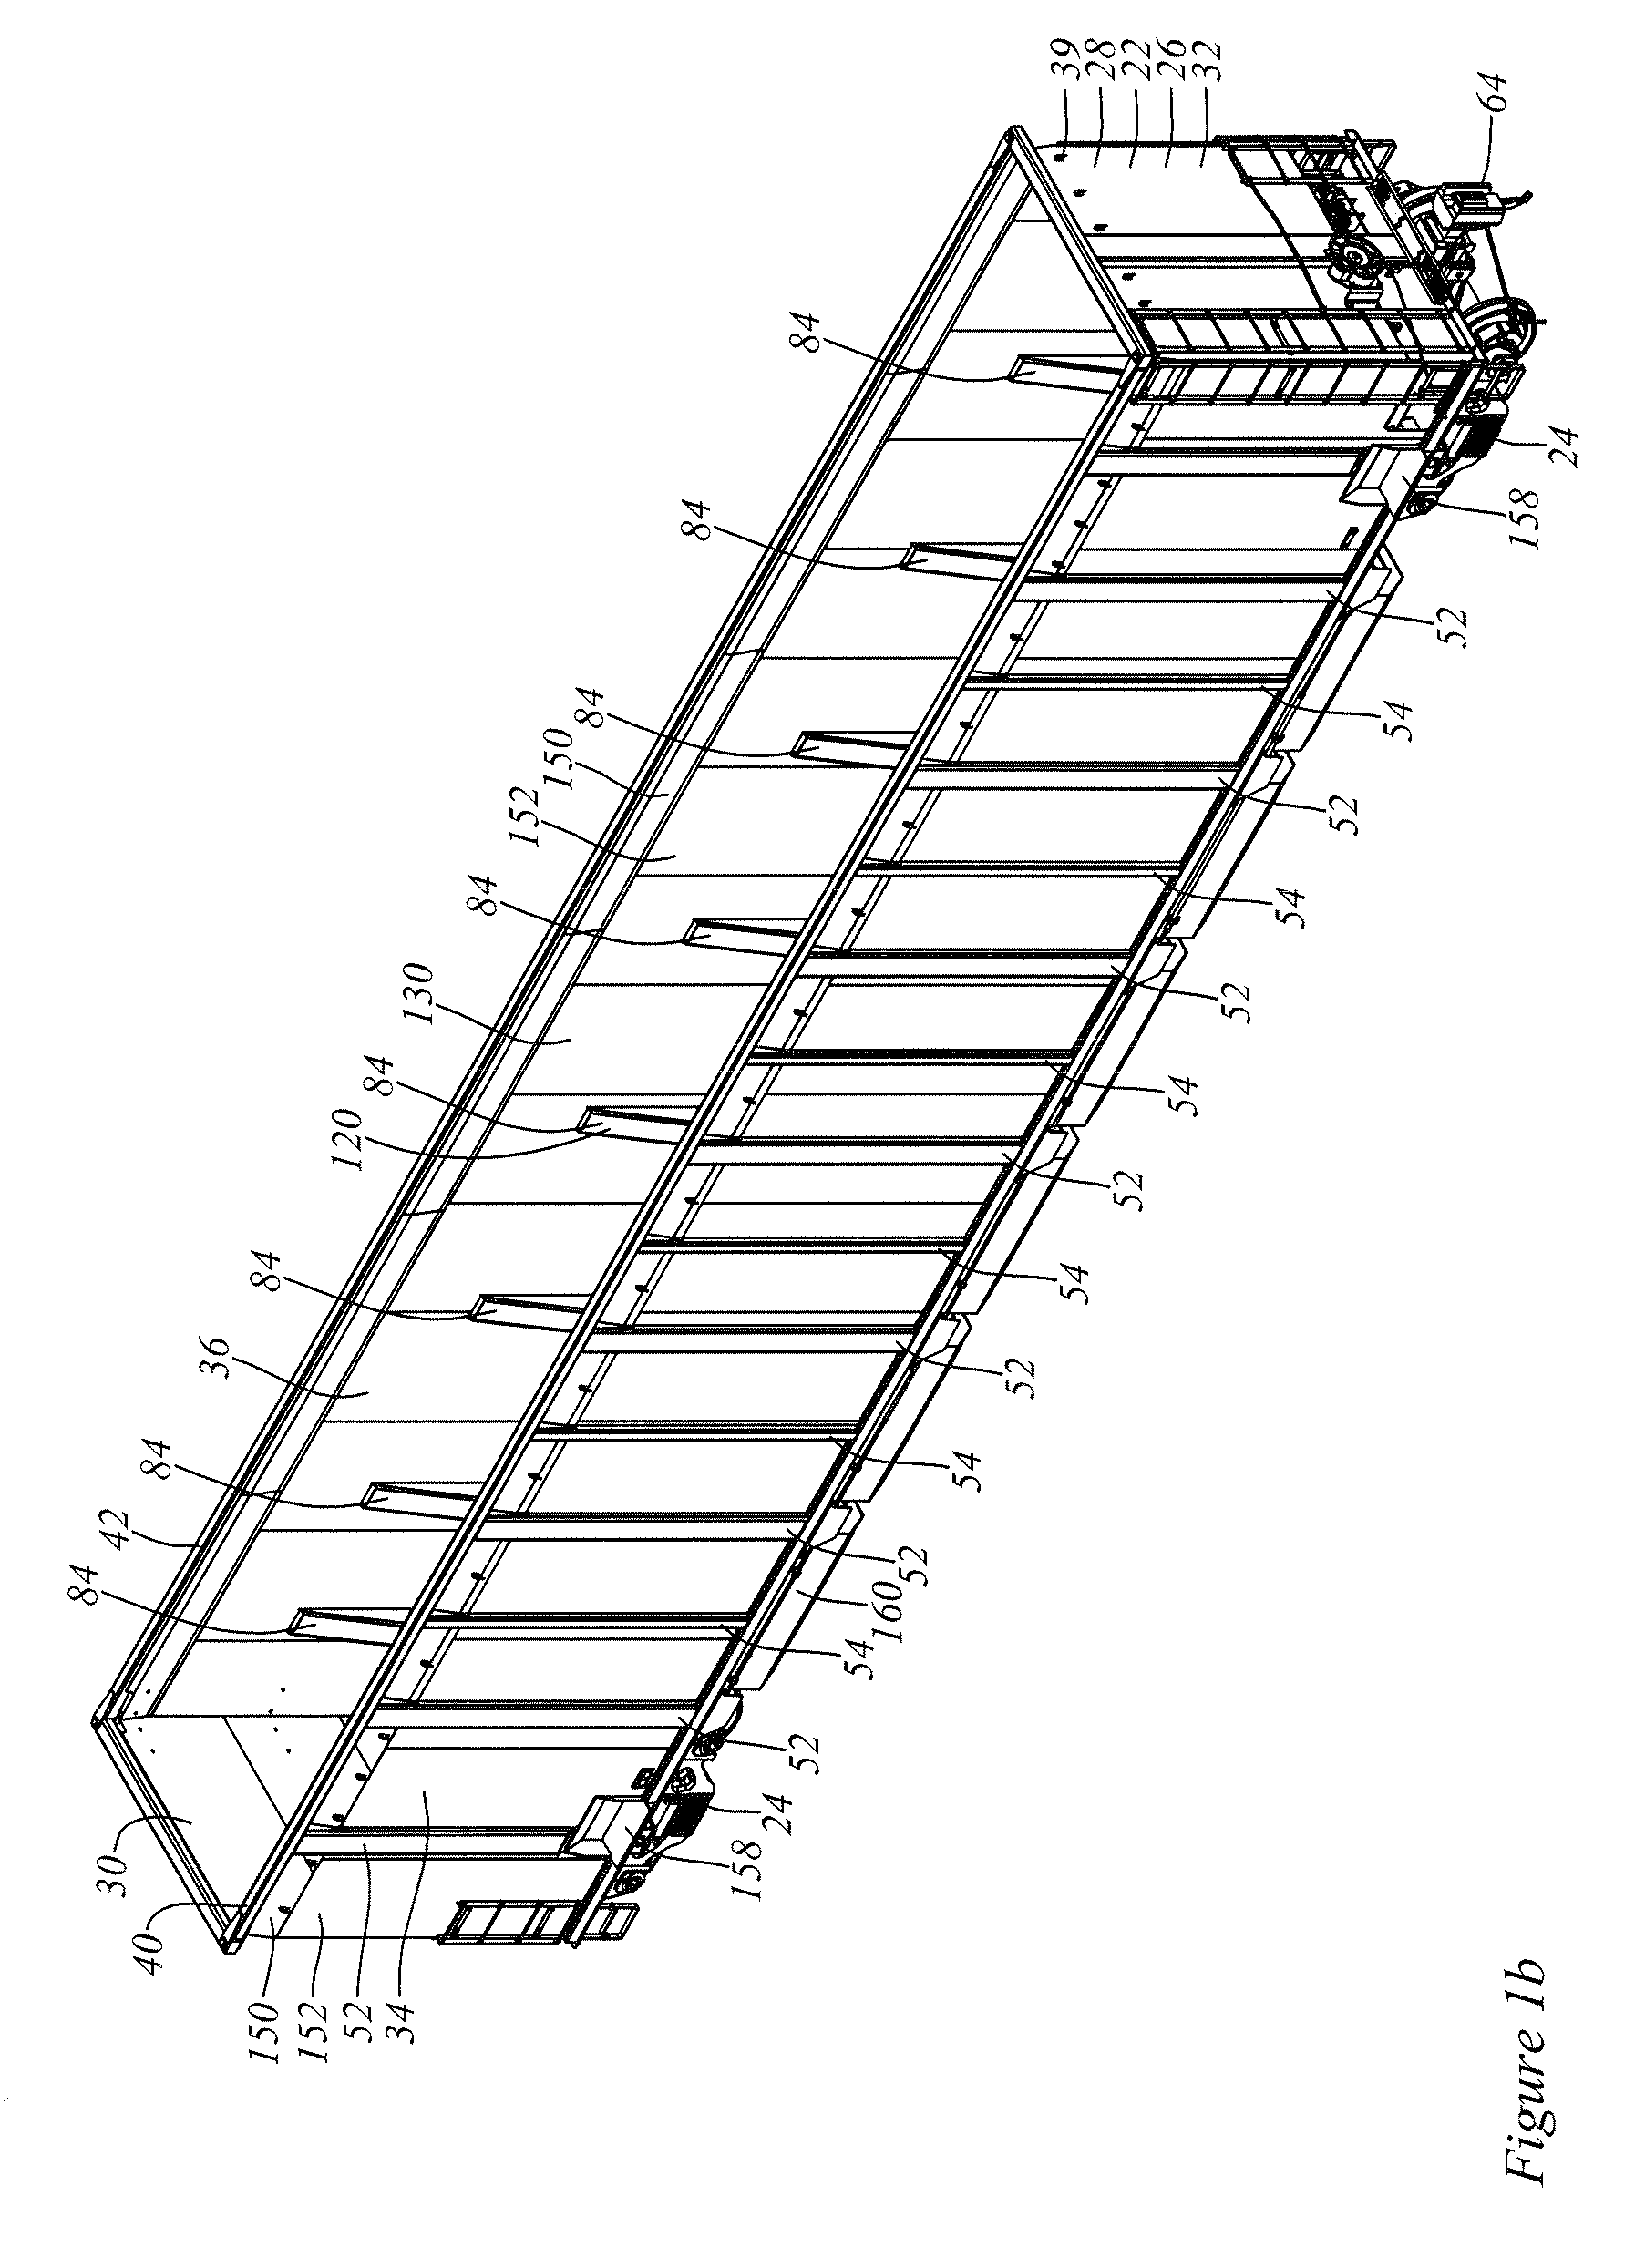 Railroad gondola car structure